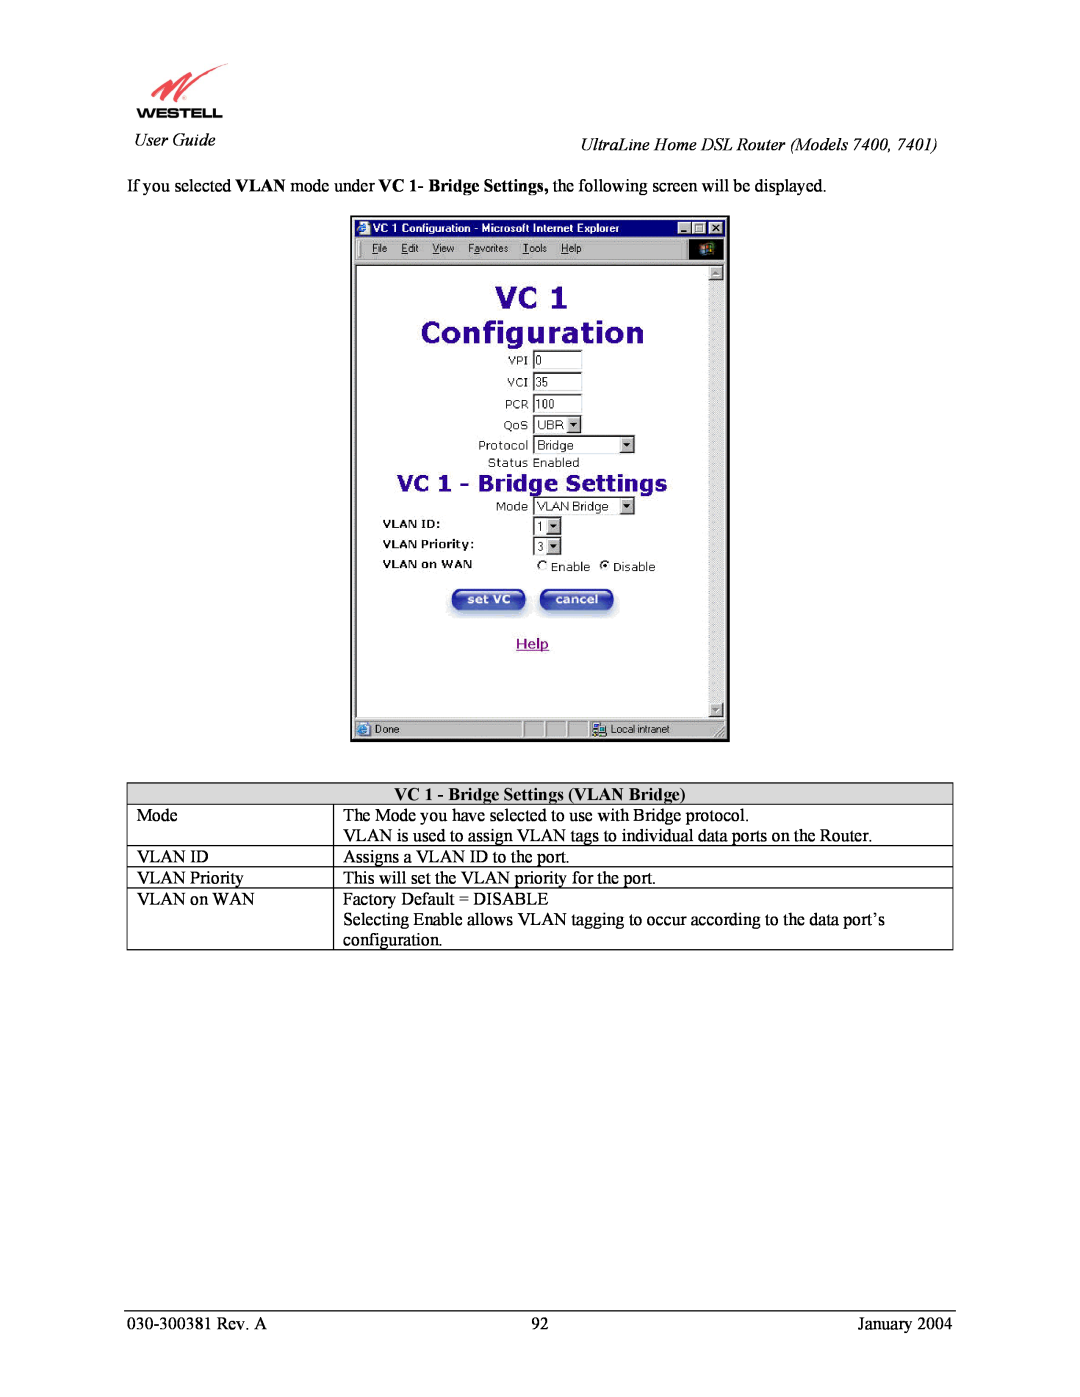 Westell Technologies 7401, 7400 manual VC 1 - Bridge Settings VLAN Bridge 